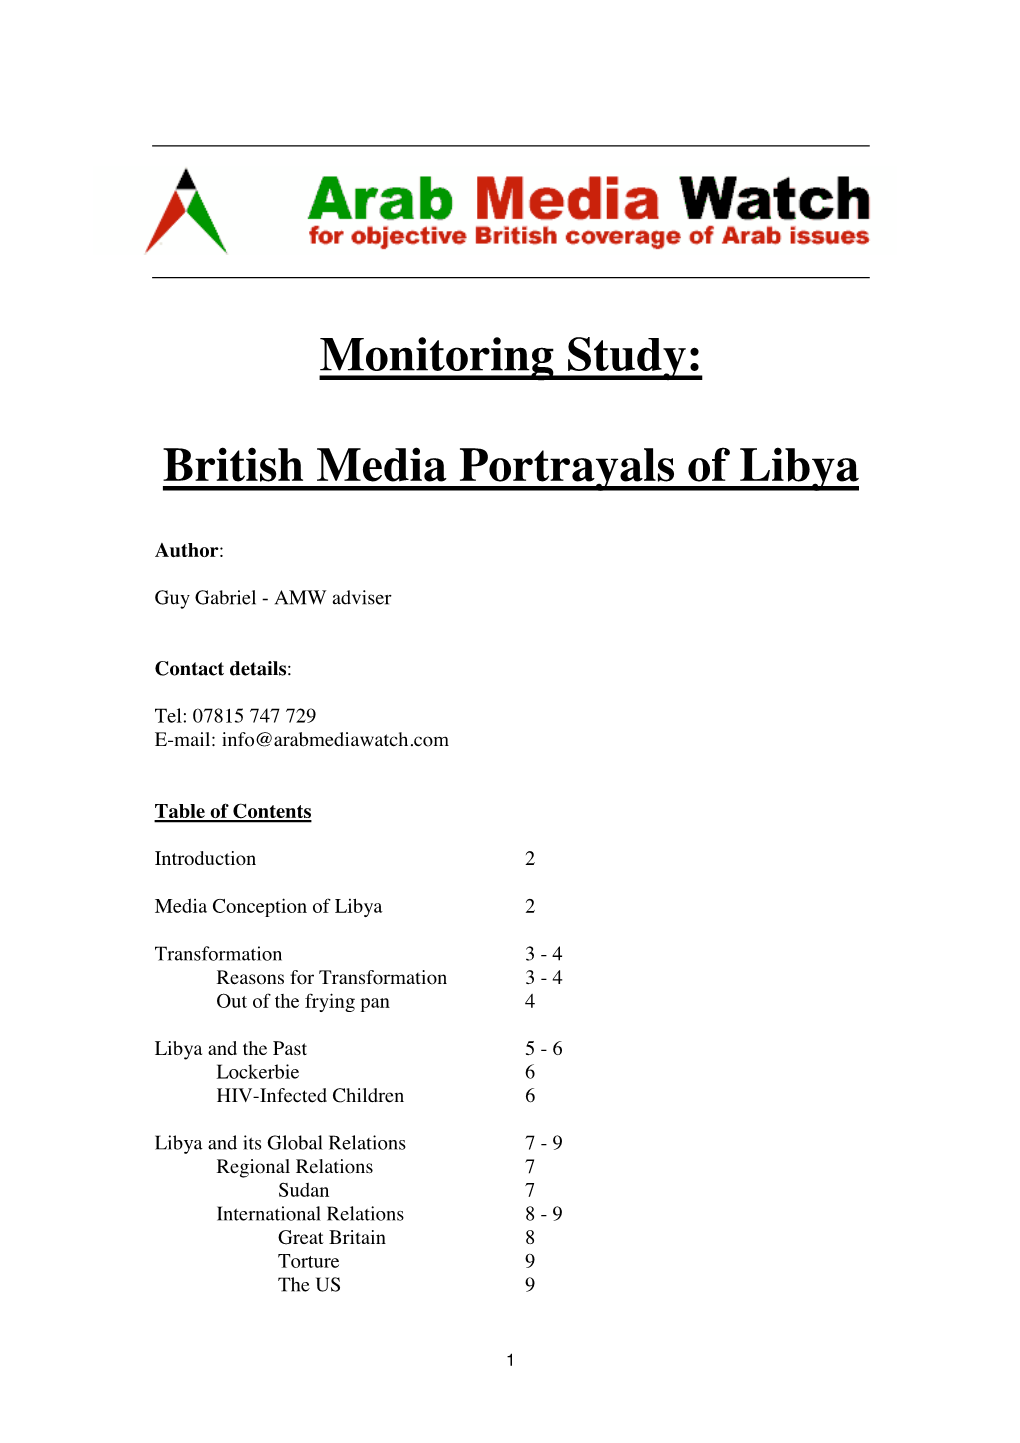 Monitoring Study: British Media Portrayals of Libya